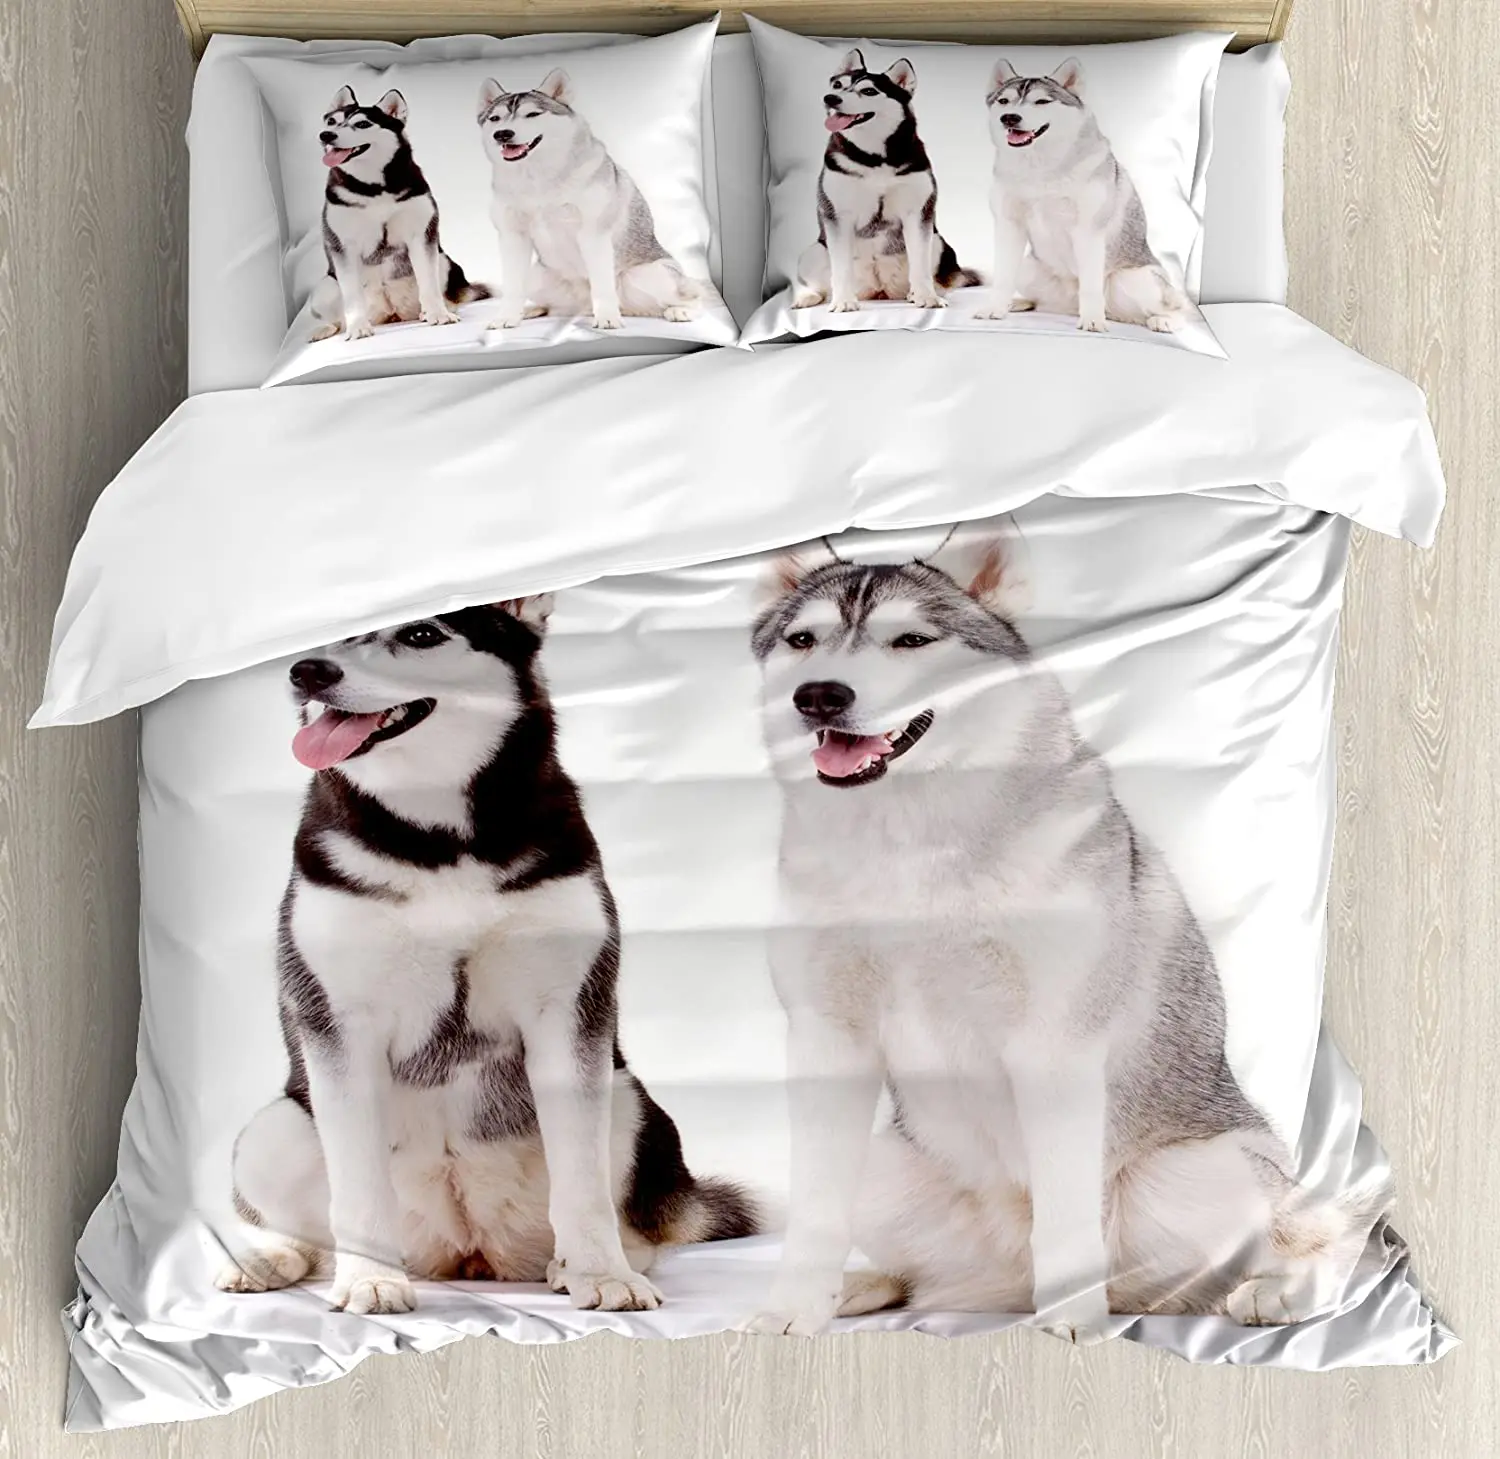 

Alaskan Malamute Bedding Set For Bedroom Bed Home Furry Arctic Doggies Husky Whelp Pedigre Duvet Cover Quilt Cover Pillowcase